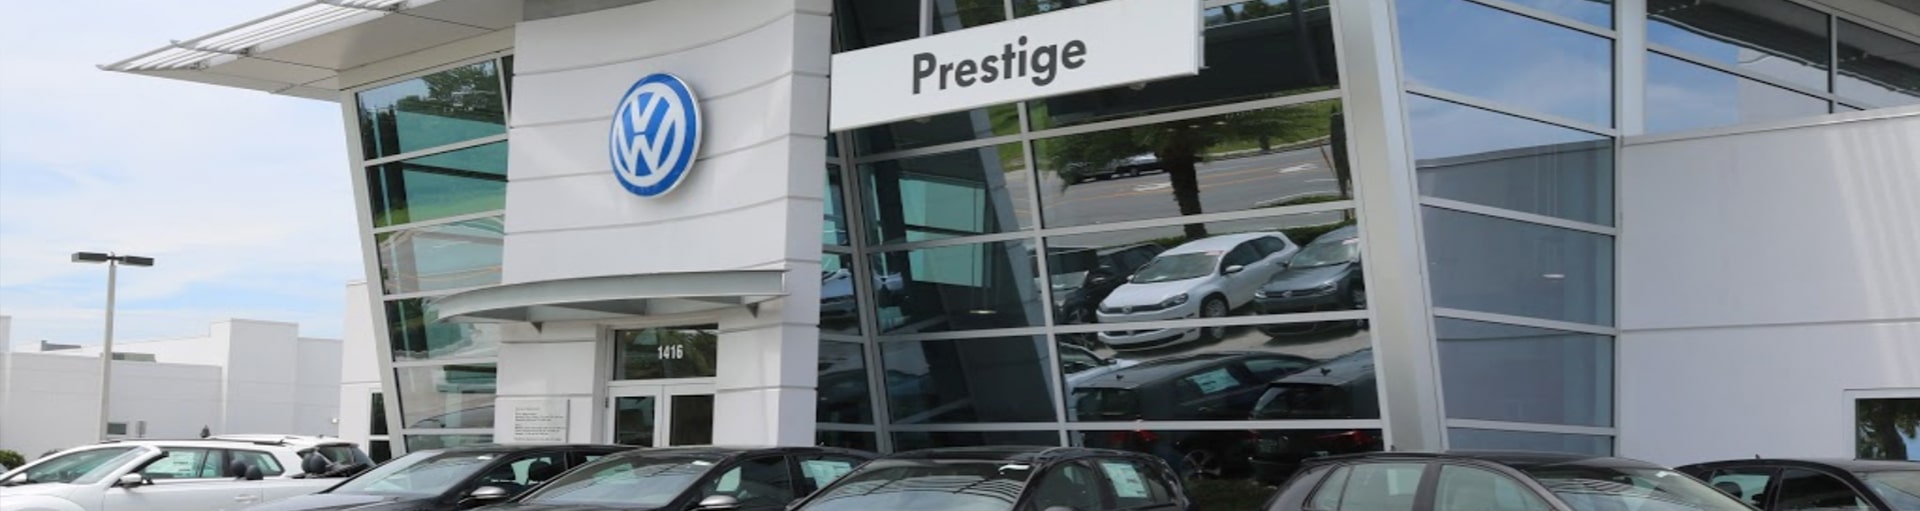 Prestige Volkswagen of Melbourne Diesel Oil Change